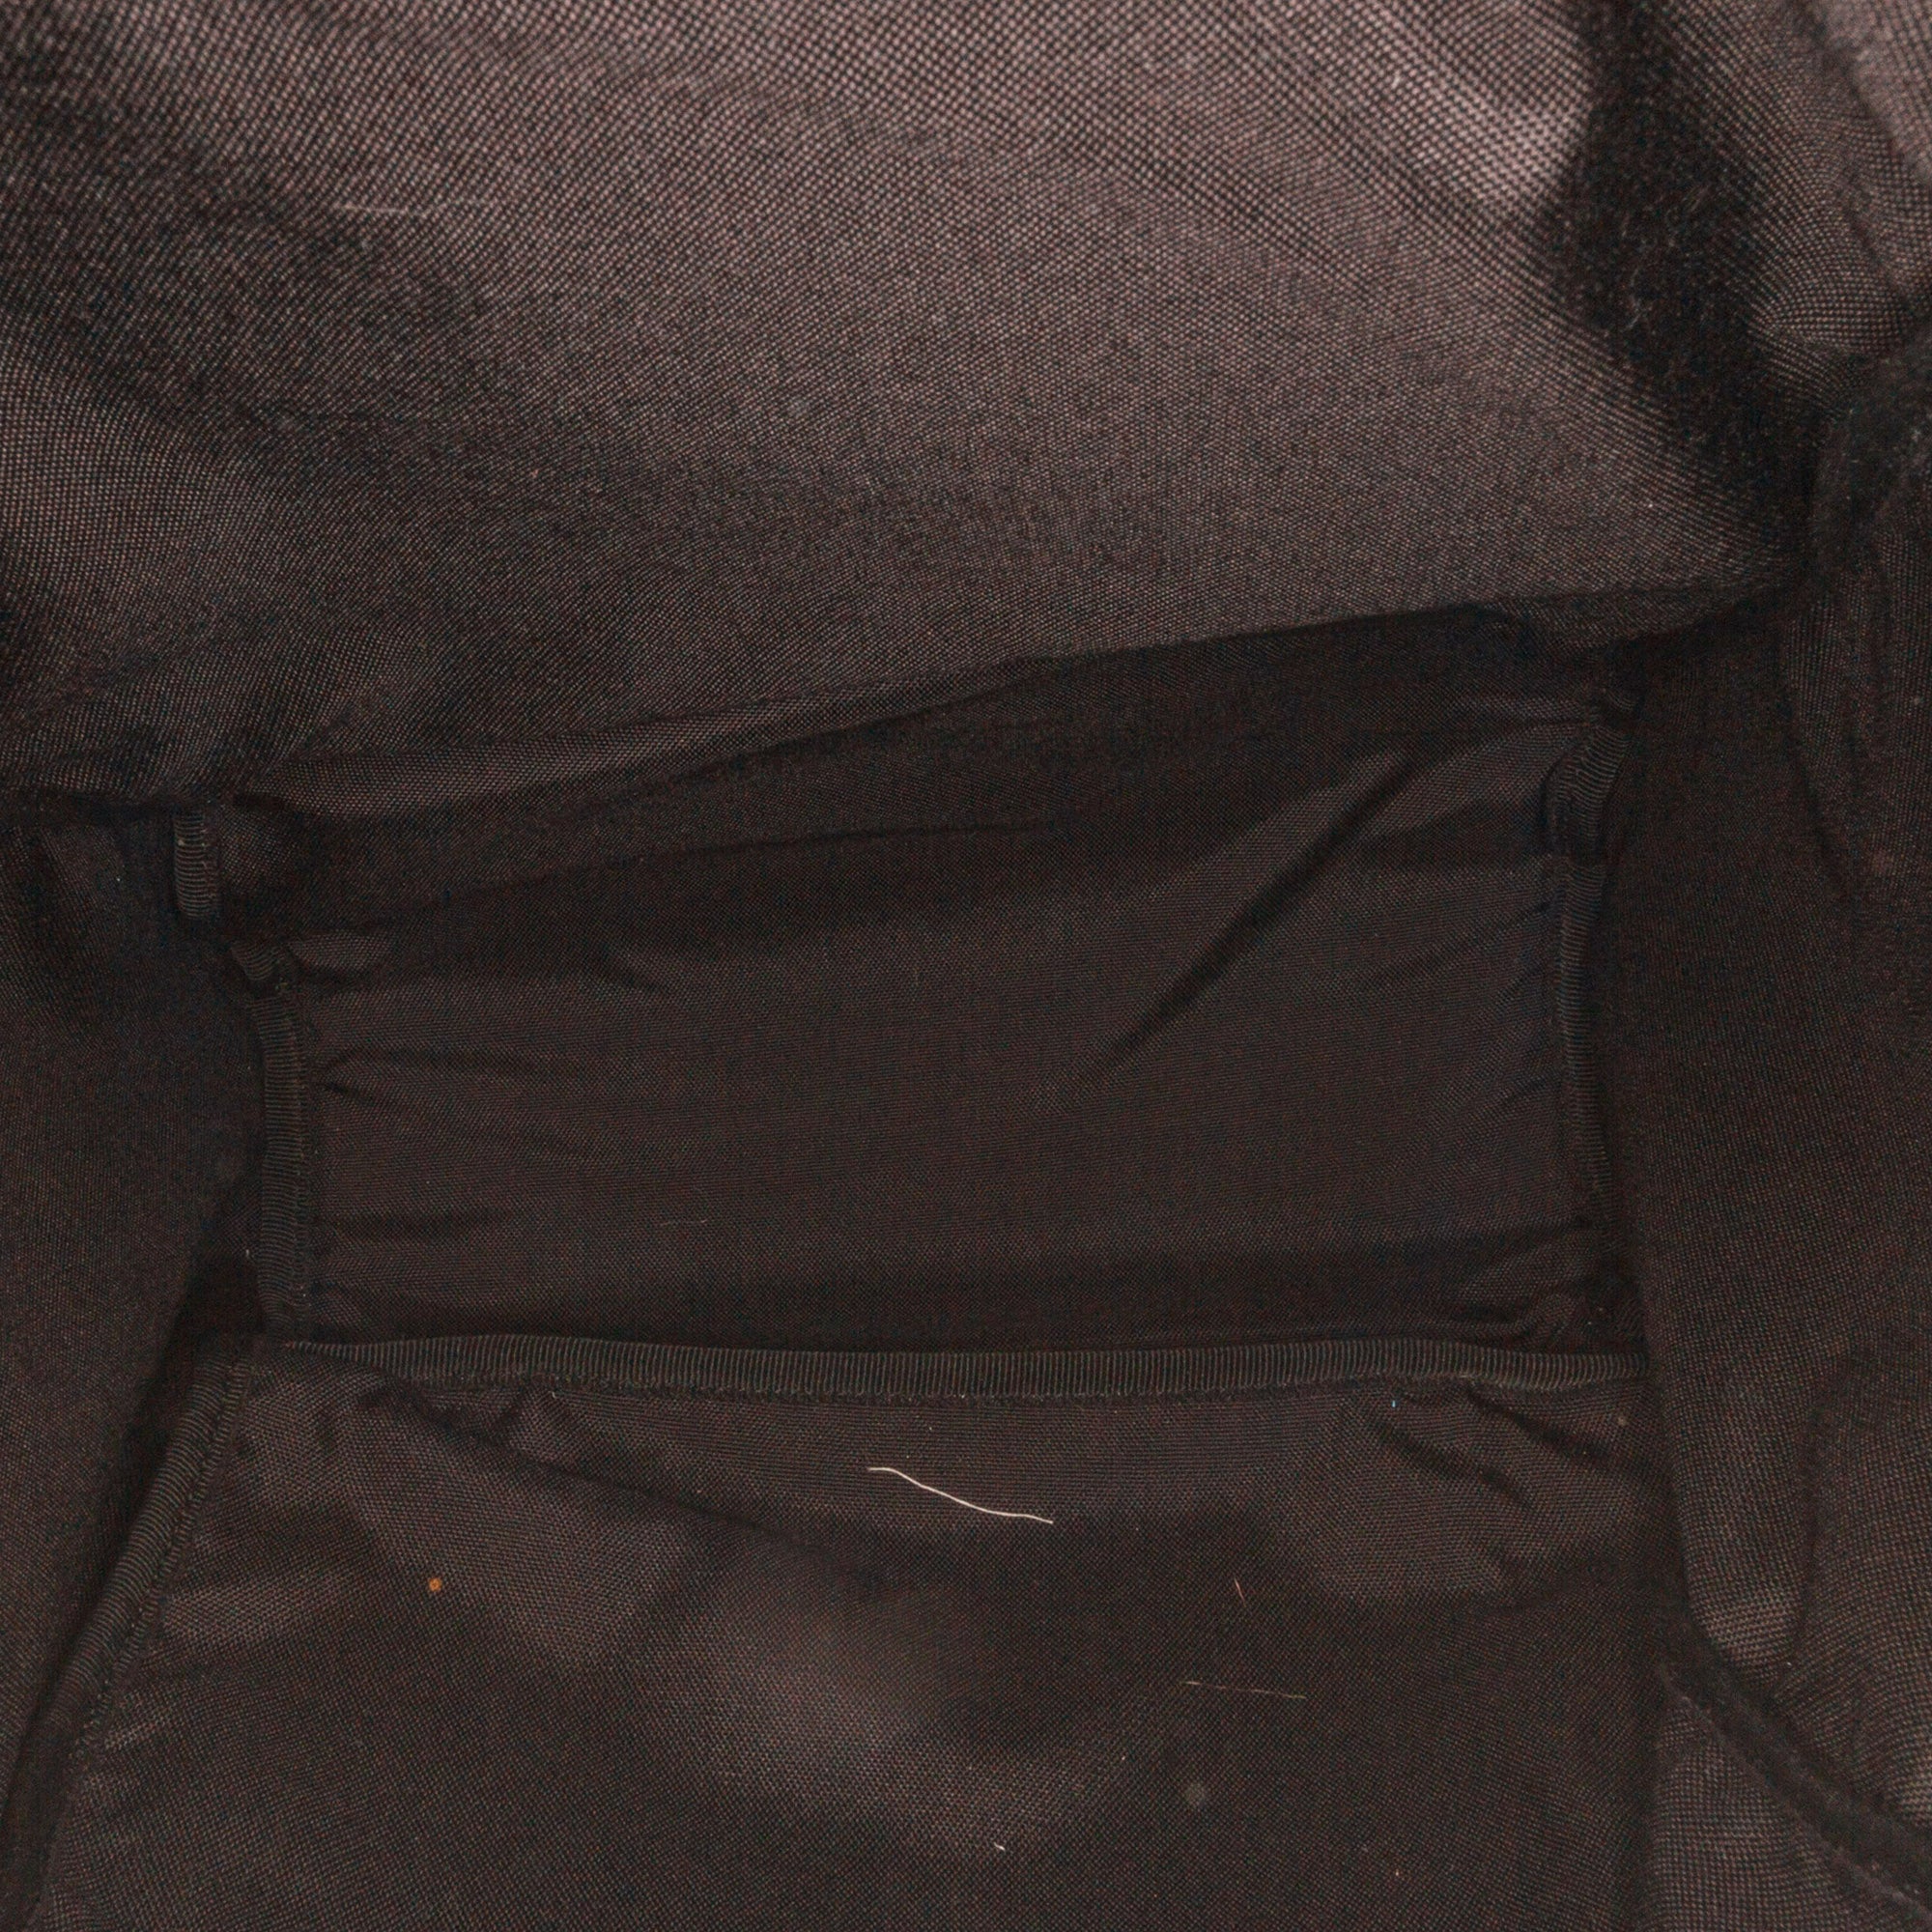 Yves Saint Laurent Utilitarian Hunting Backpack Black Canvas